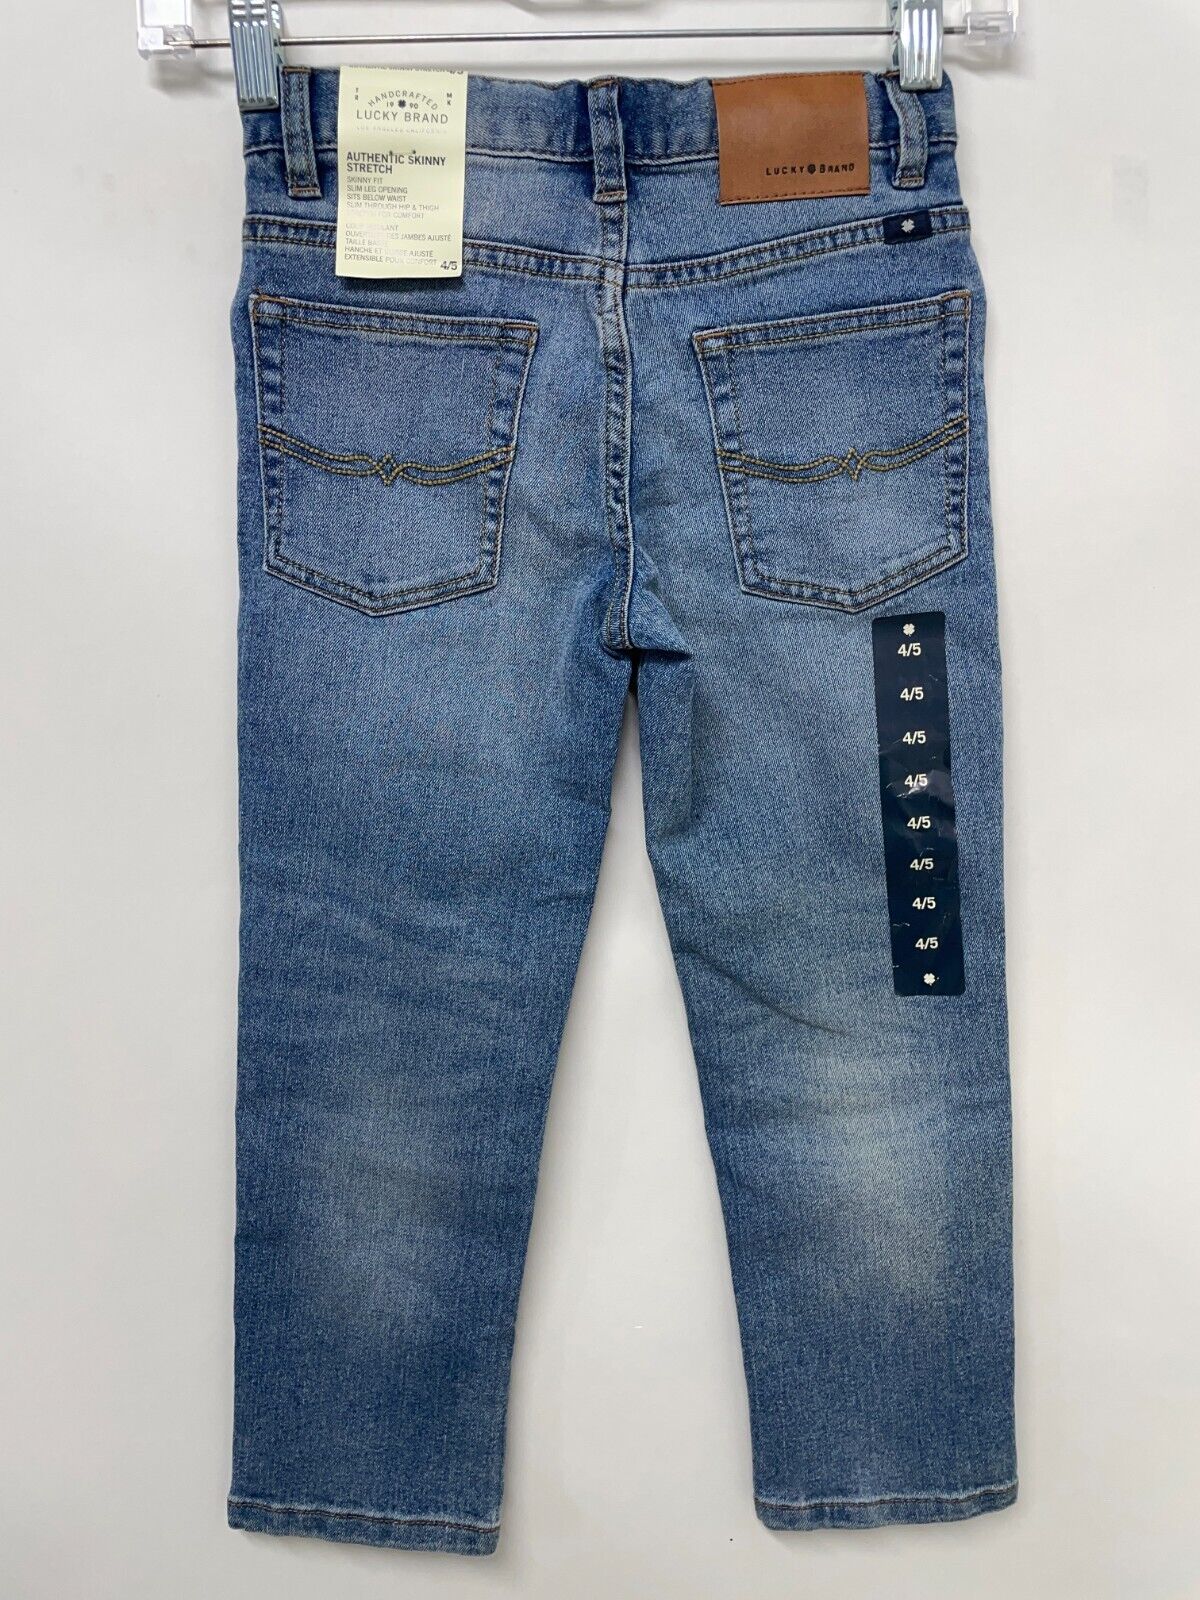 Lucky Brand Kids Boys 4/5 Authentic Skinny Jeans Blue Button Fly Stretch Denim